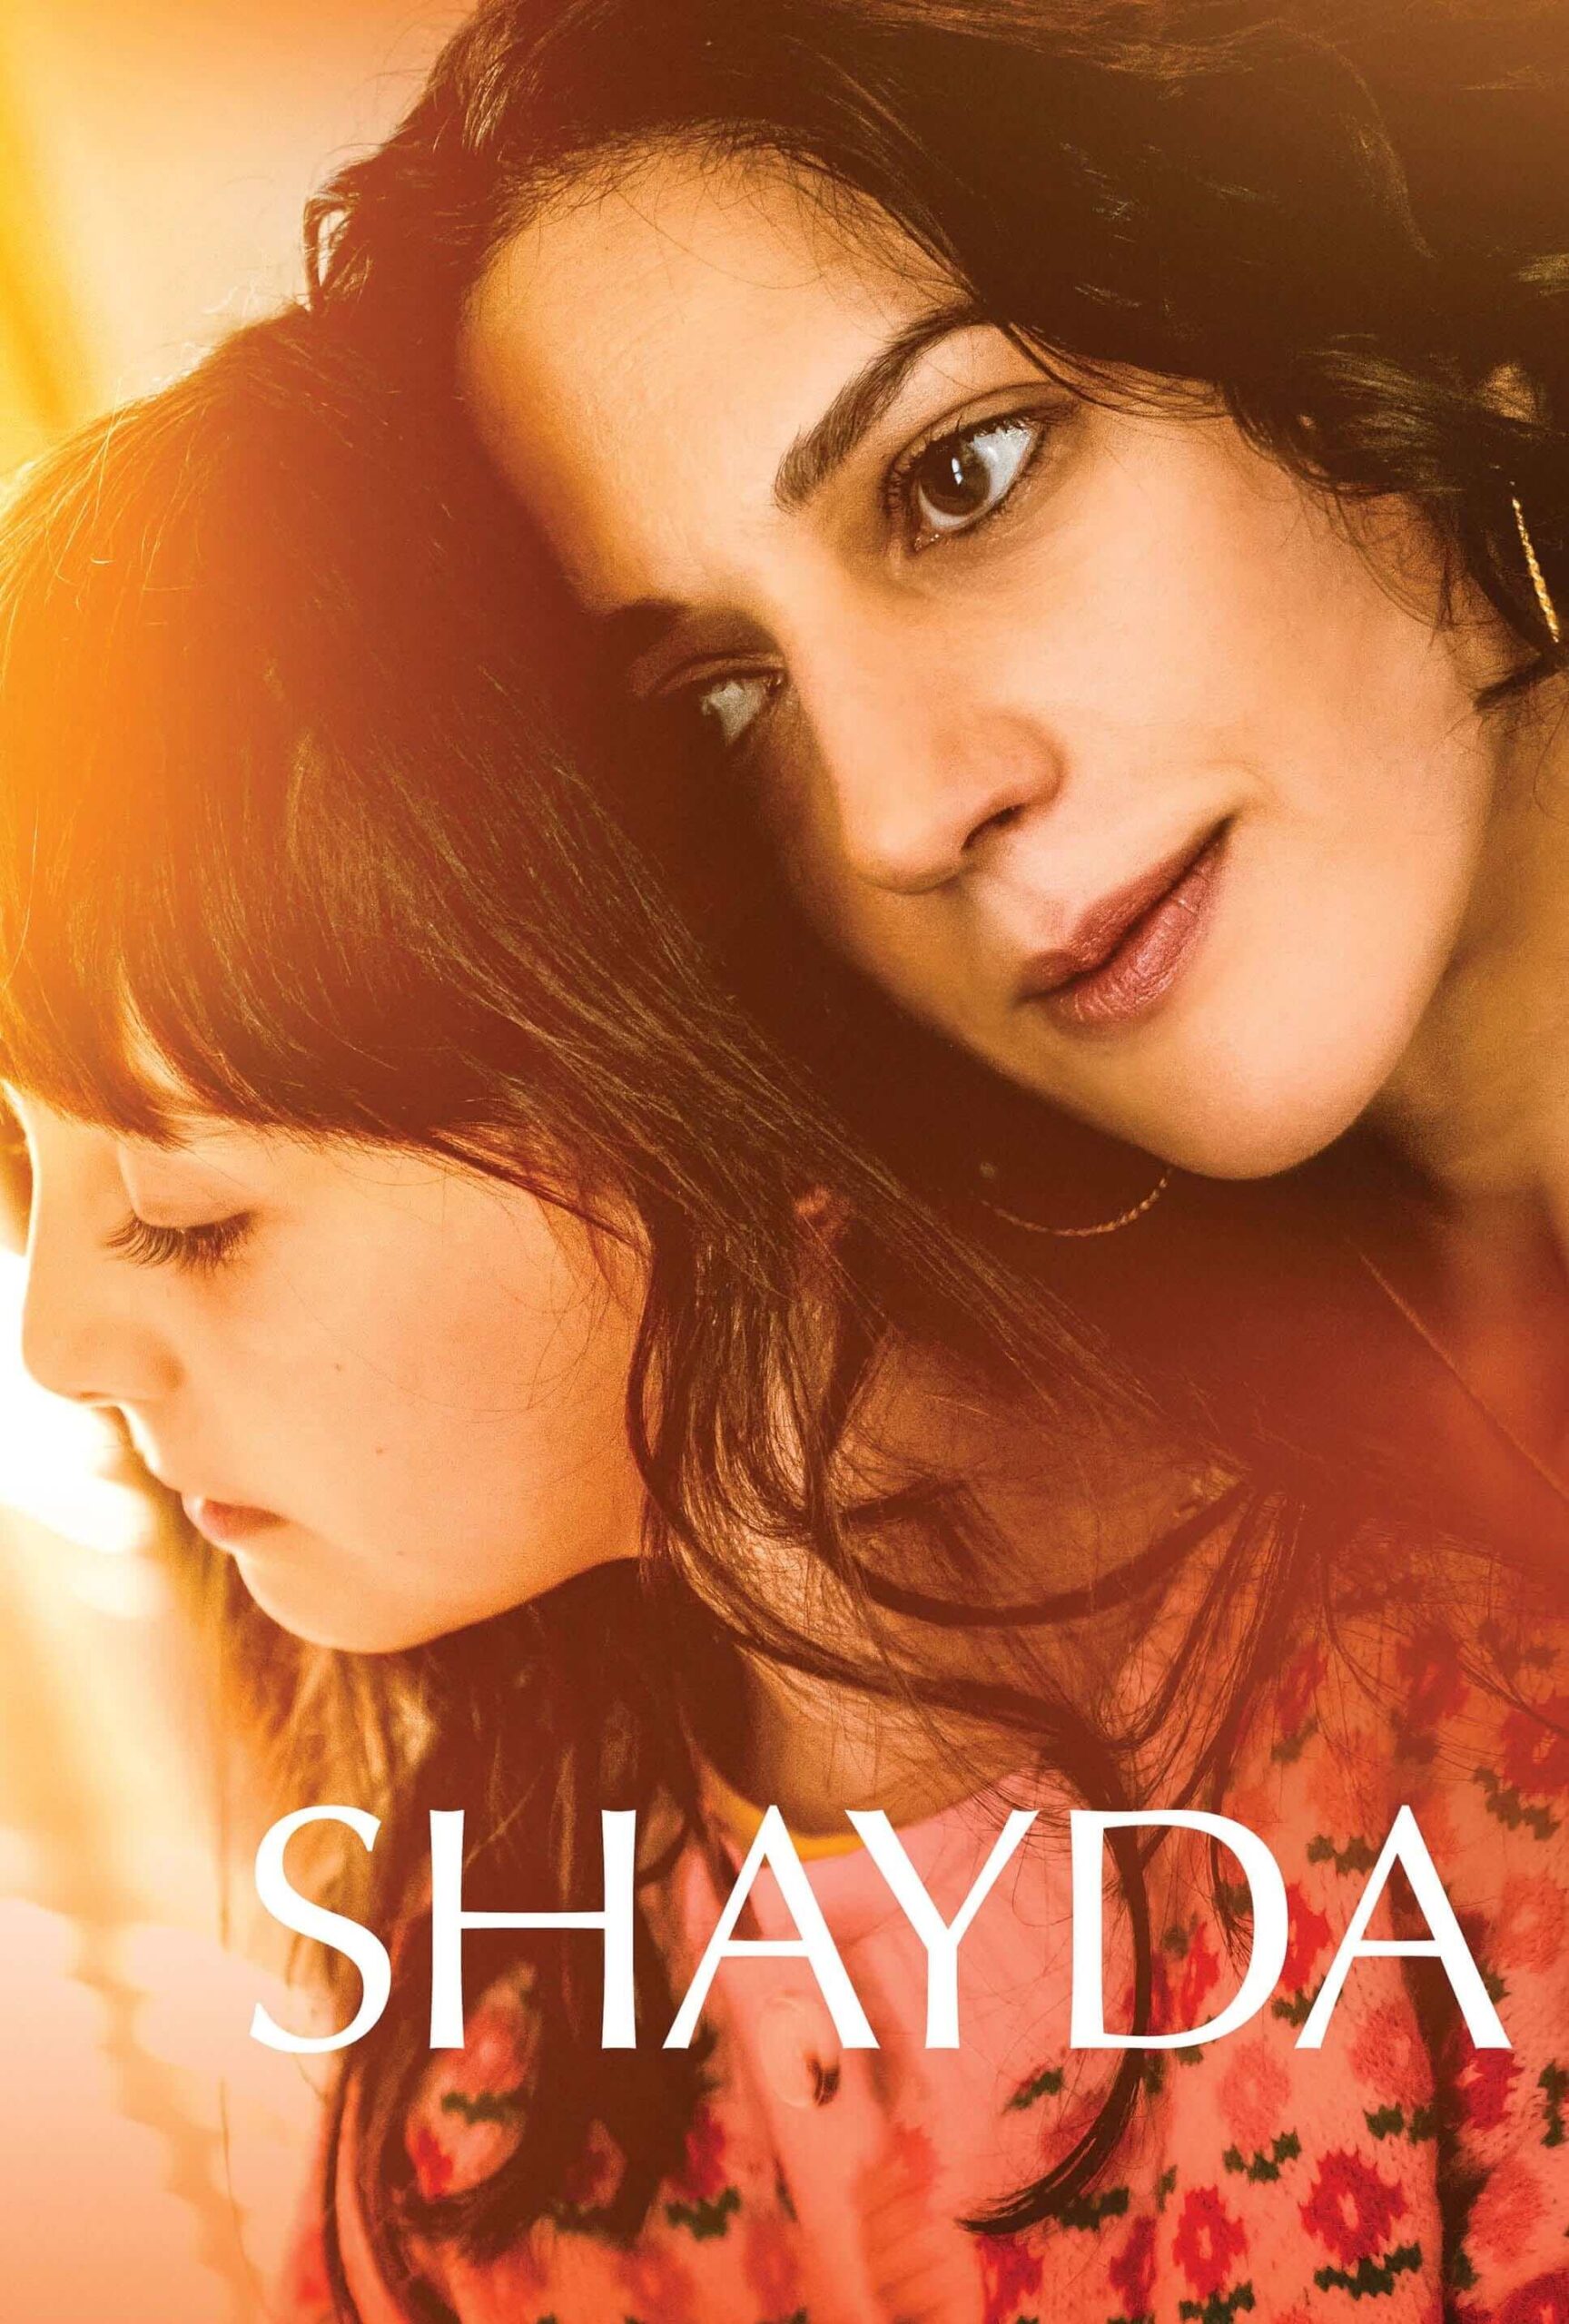 شیدا (Shayda)